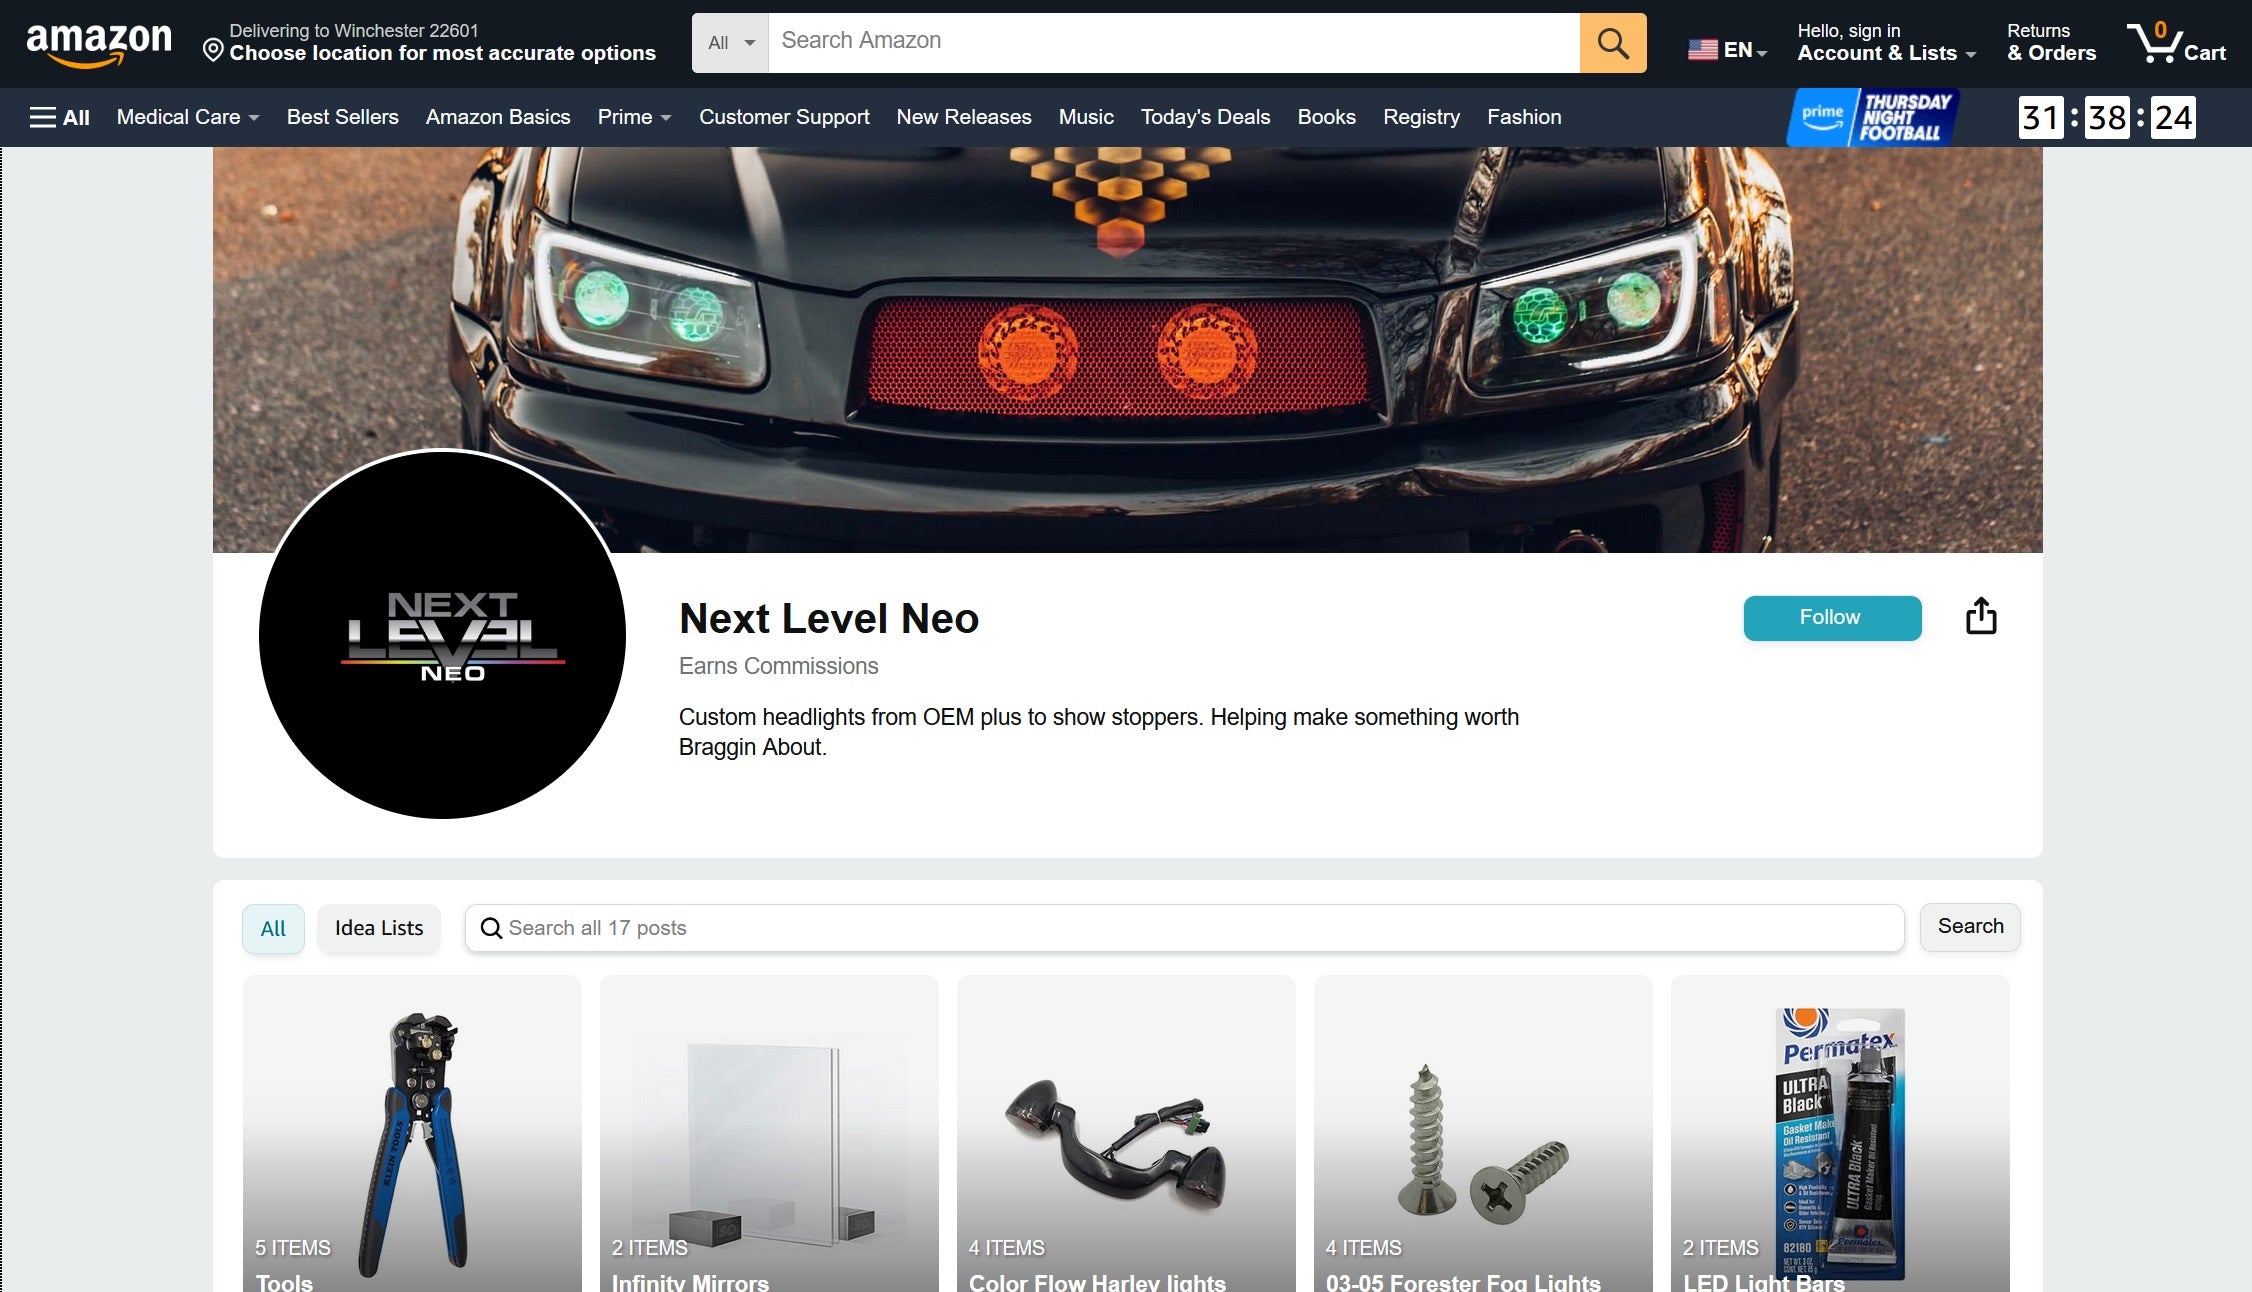 NLN Soft Touch Work Mat – Next Level Neo